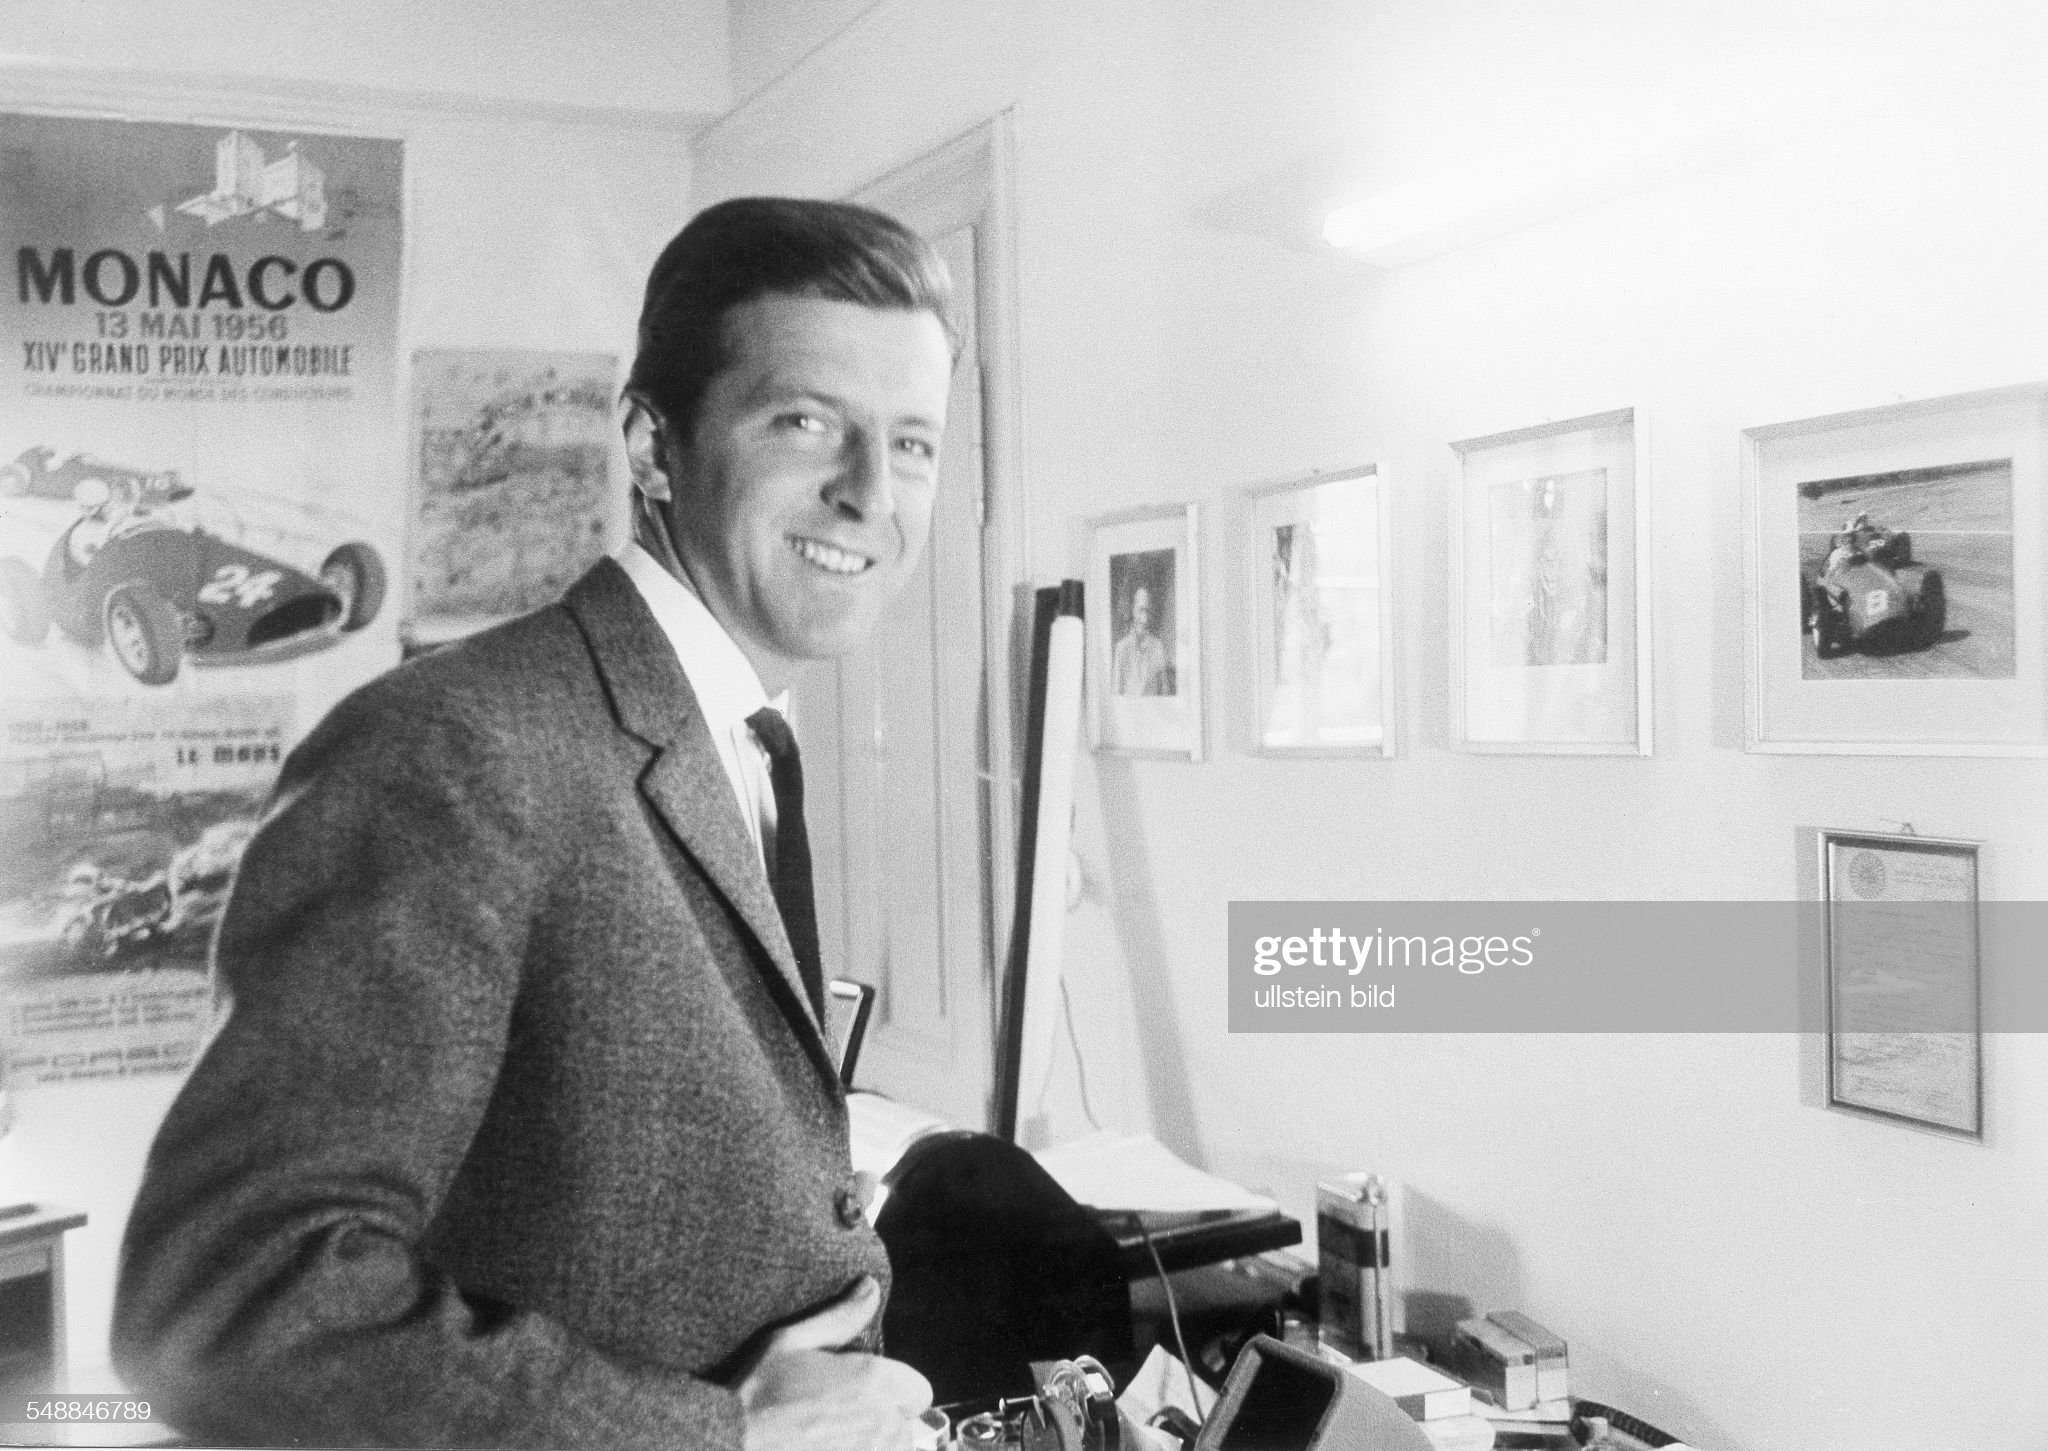 Von Trips in 1960 in his office. 